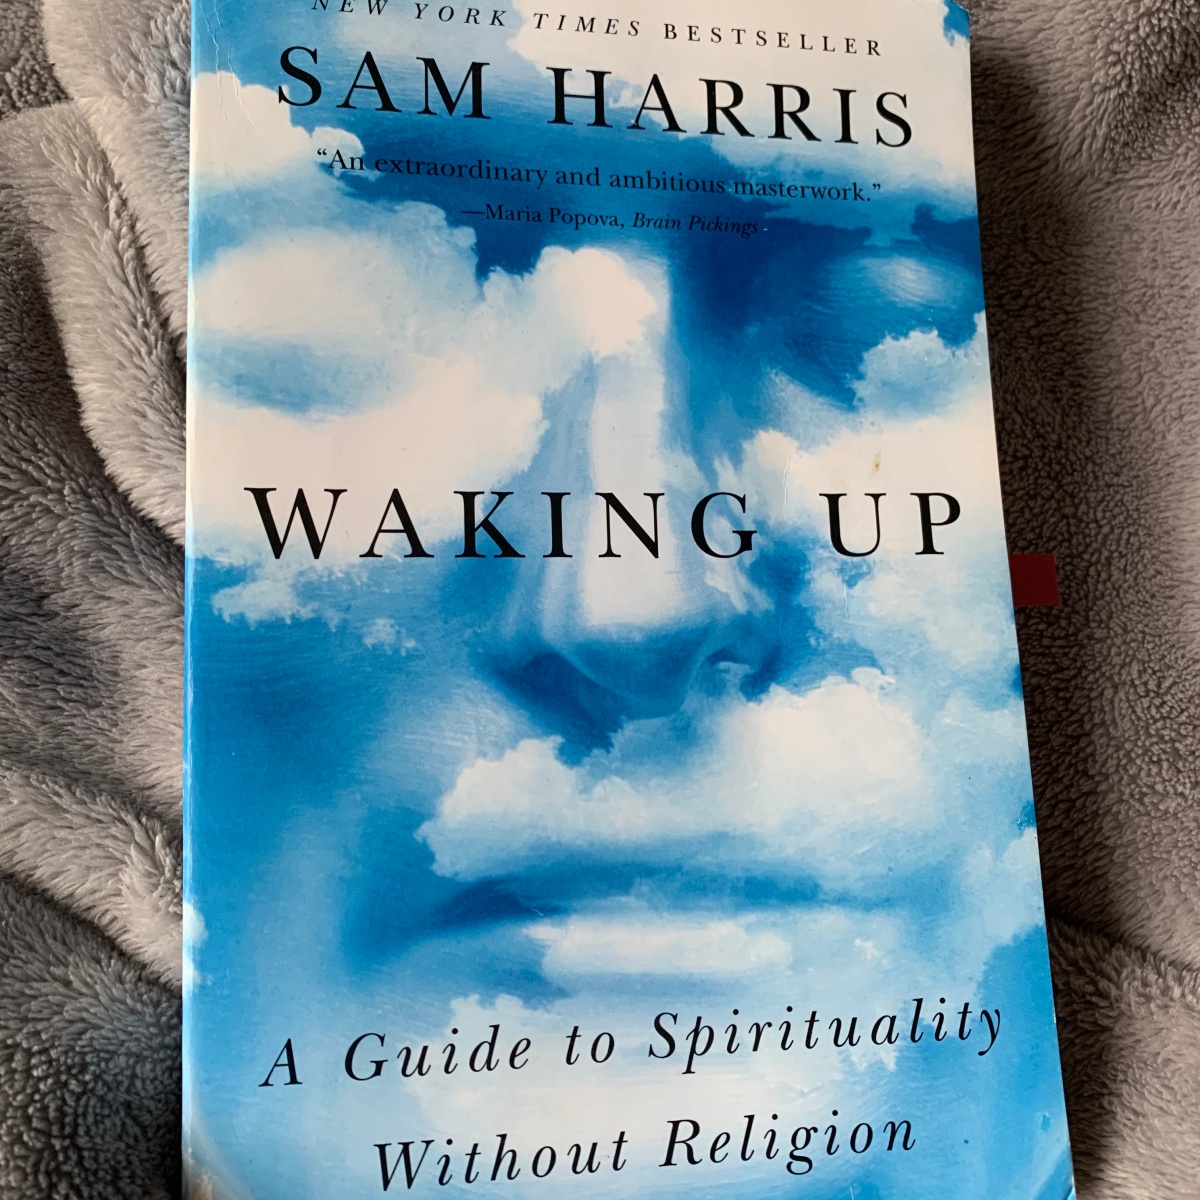 ‘Waking Up’ by Sam Harris